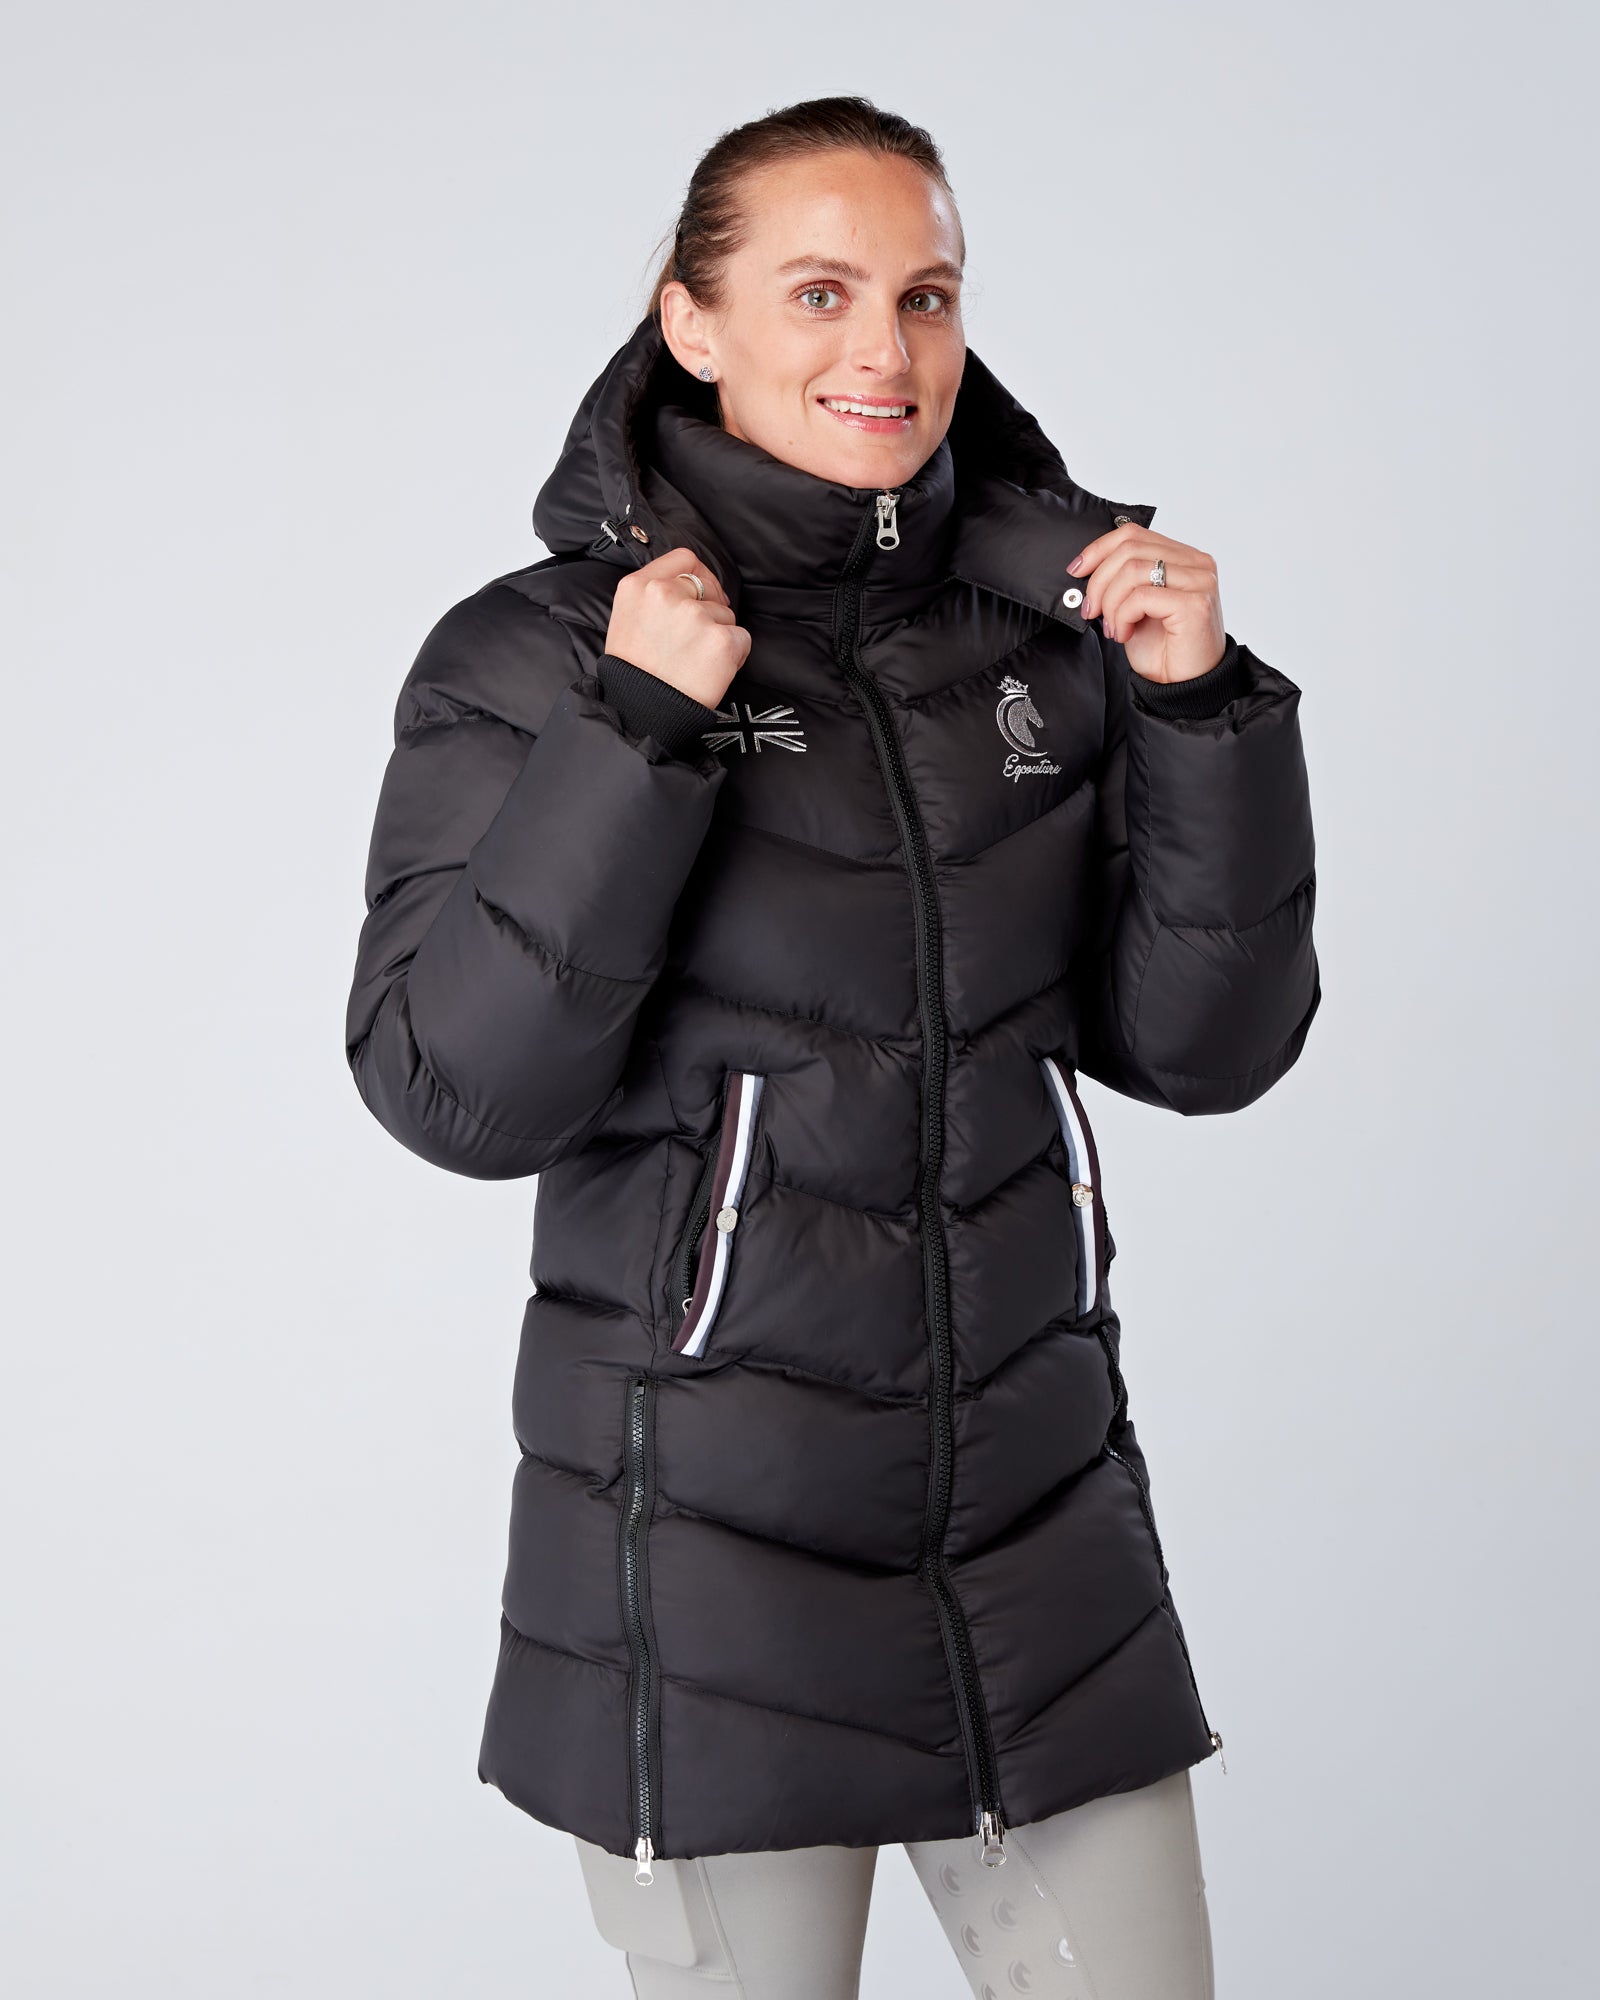 Exclusive Long Black Puffer Coat / Jacket 2.0 - Detachable Hood